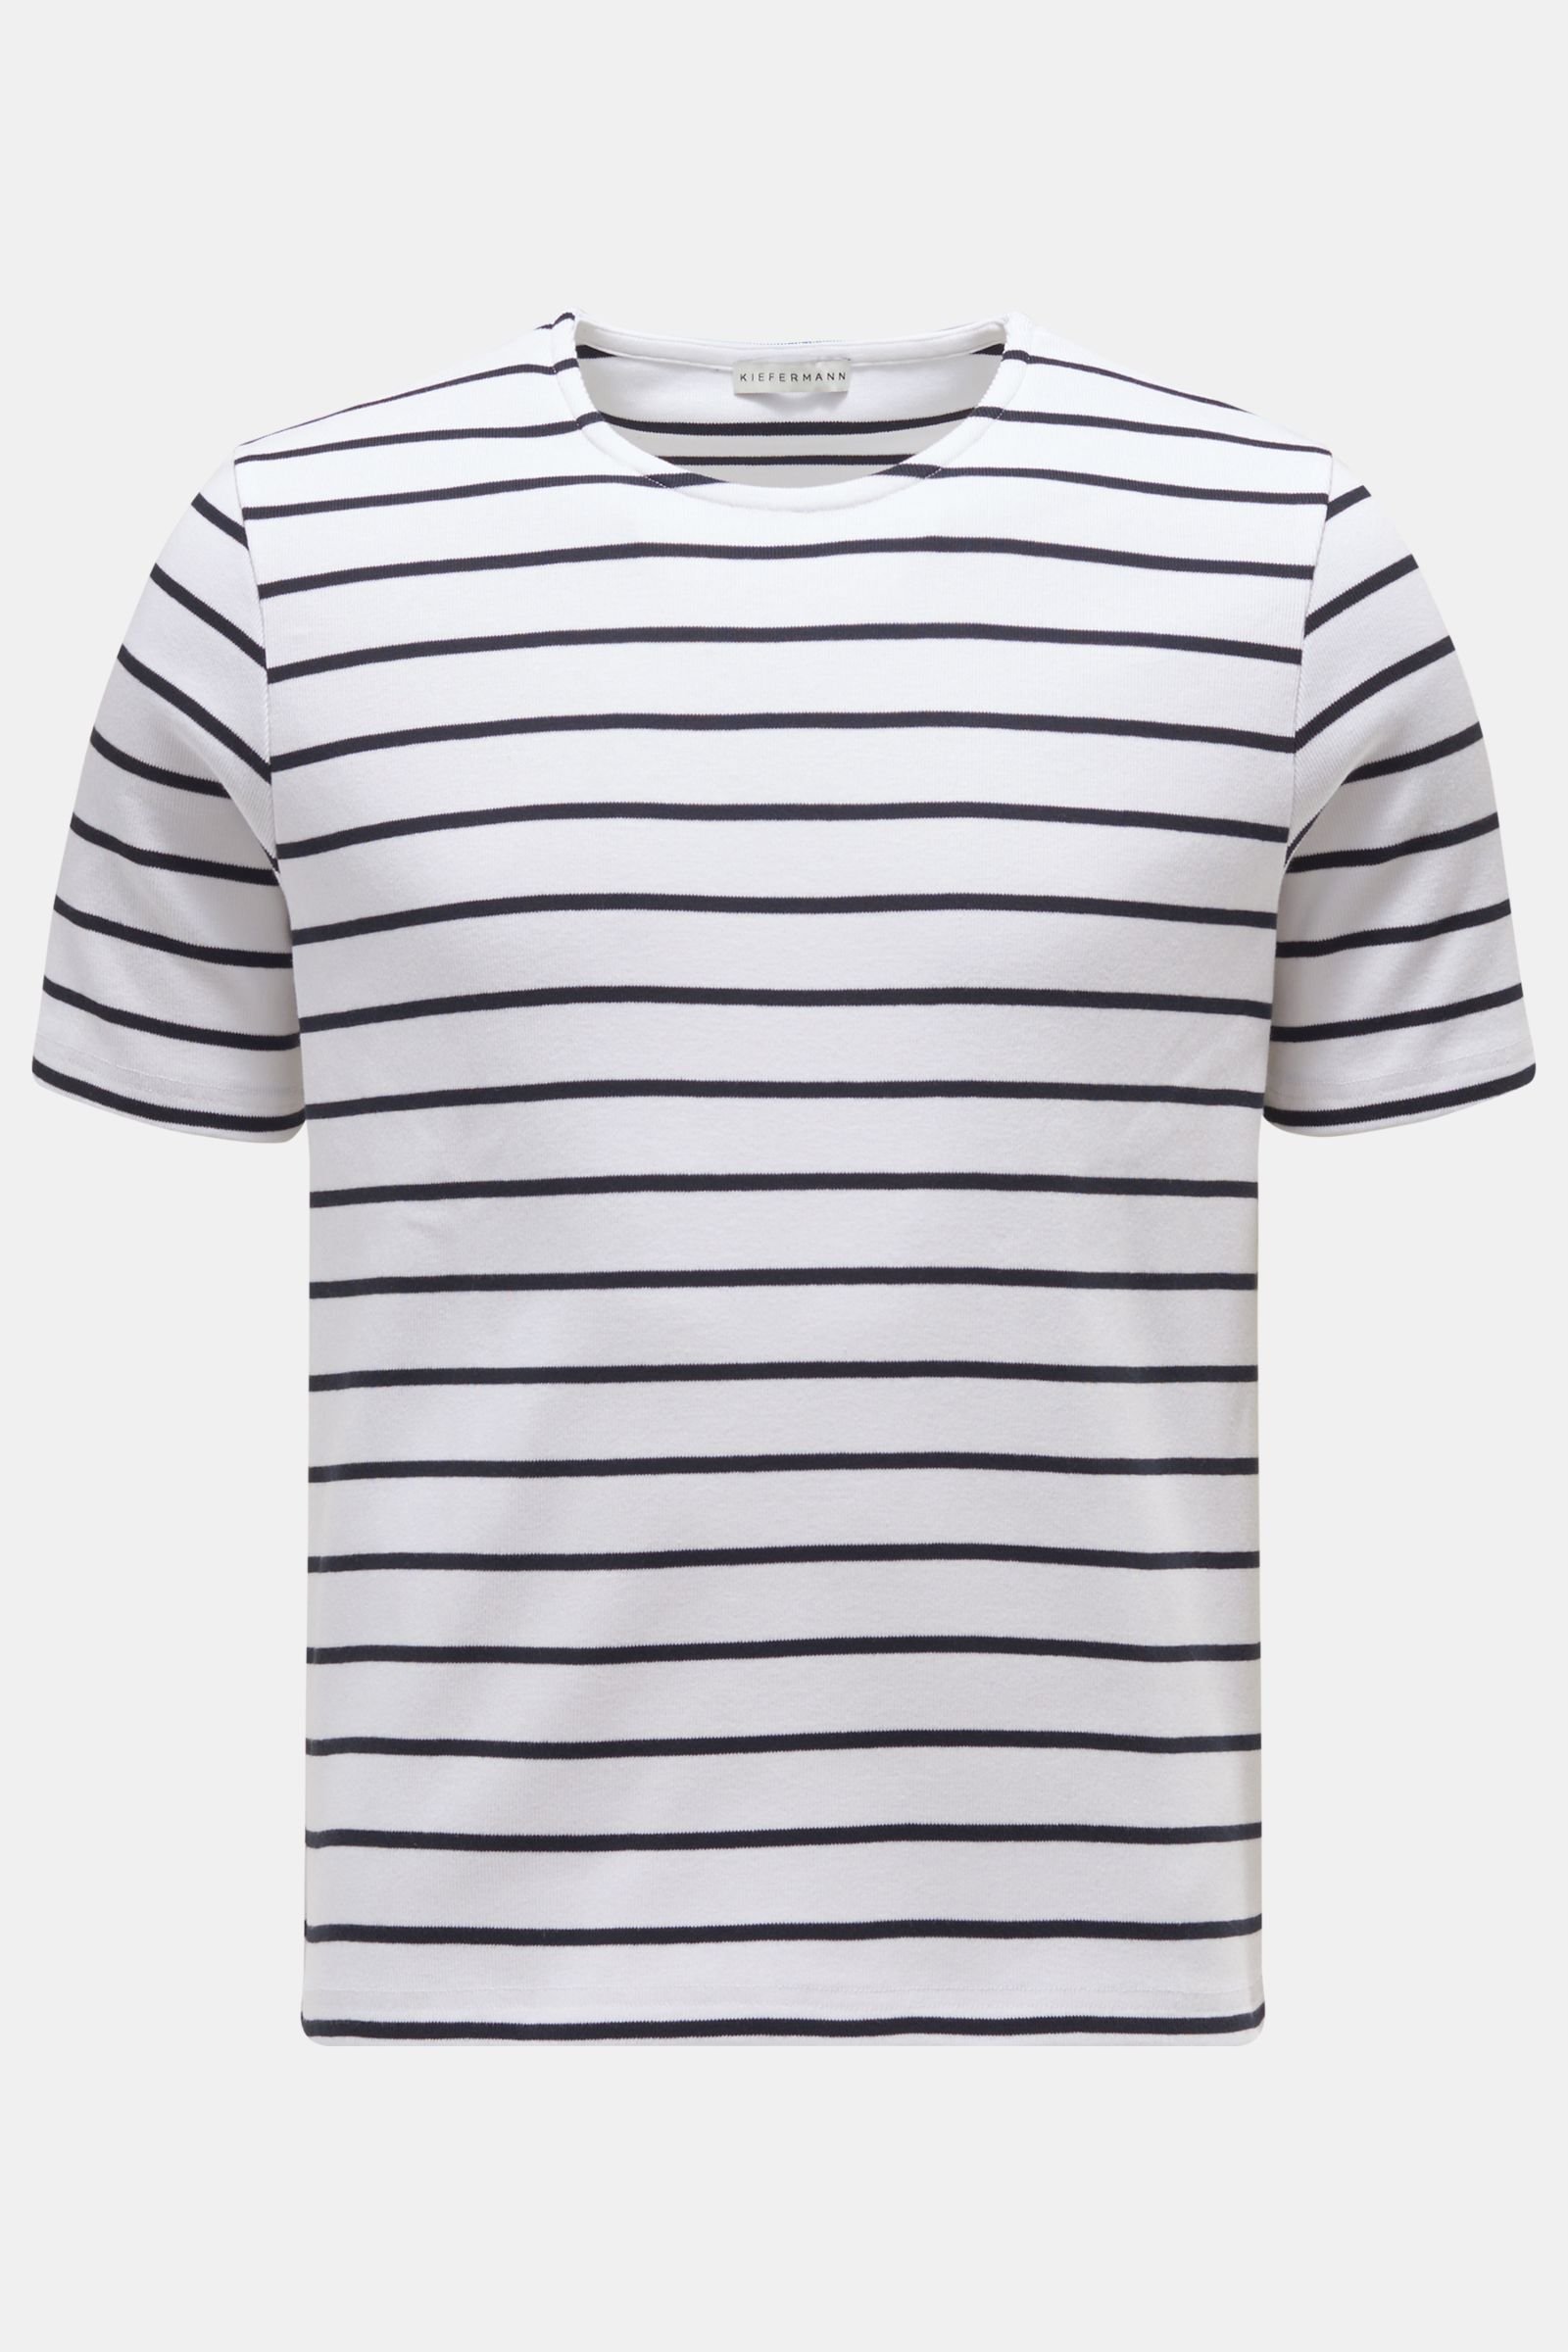 Crew neck T-shirt 'Inko' white/dark navy striped